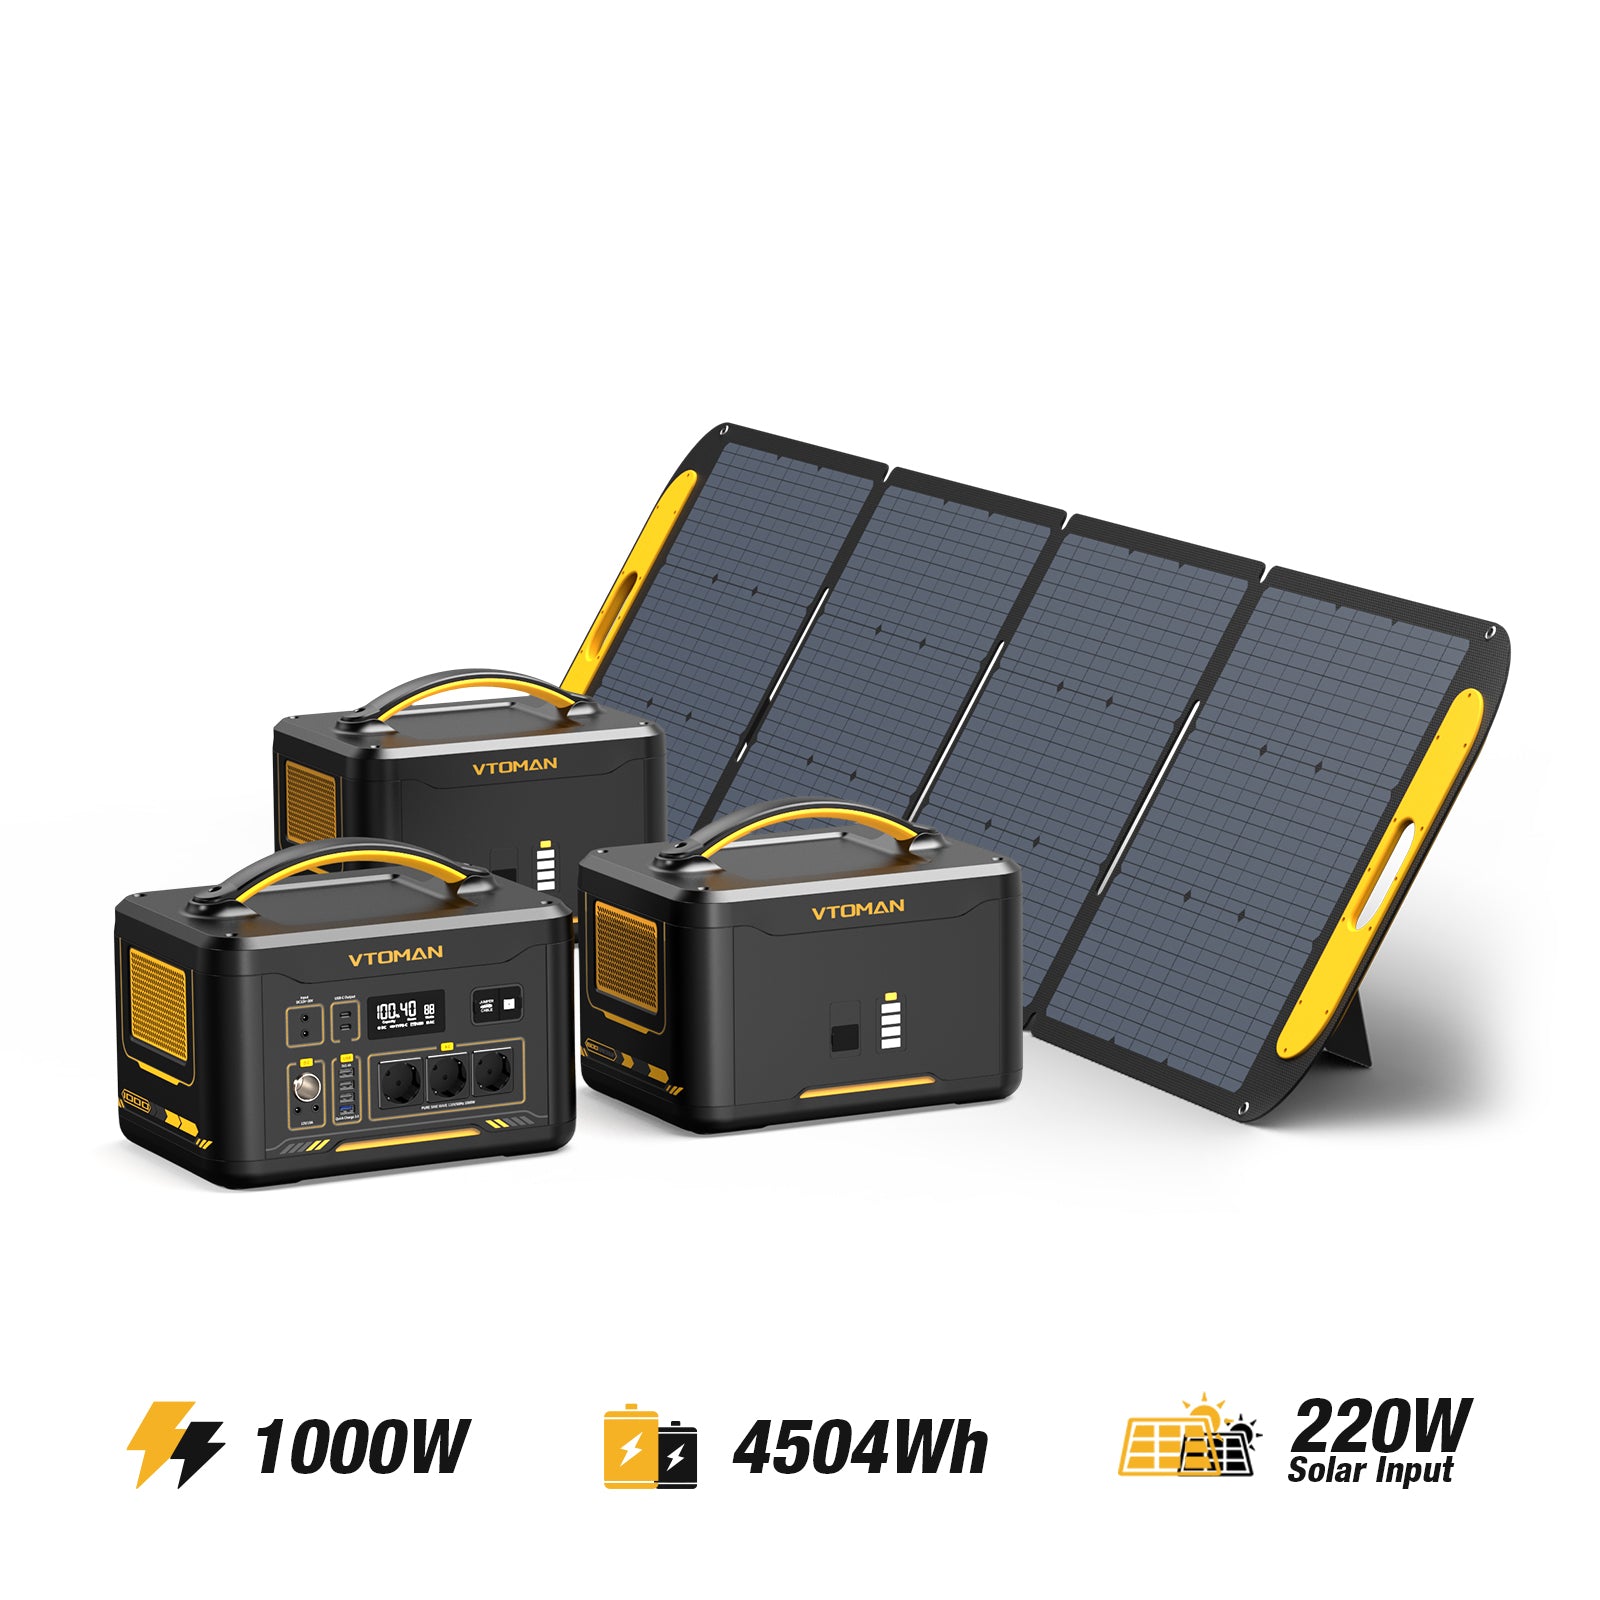 Jump 1000W/ 4504Wh 220W Solar Generator